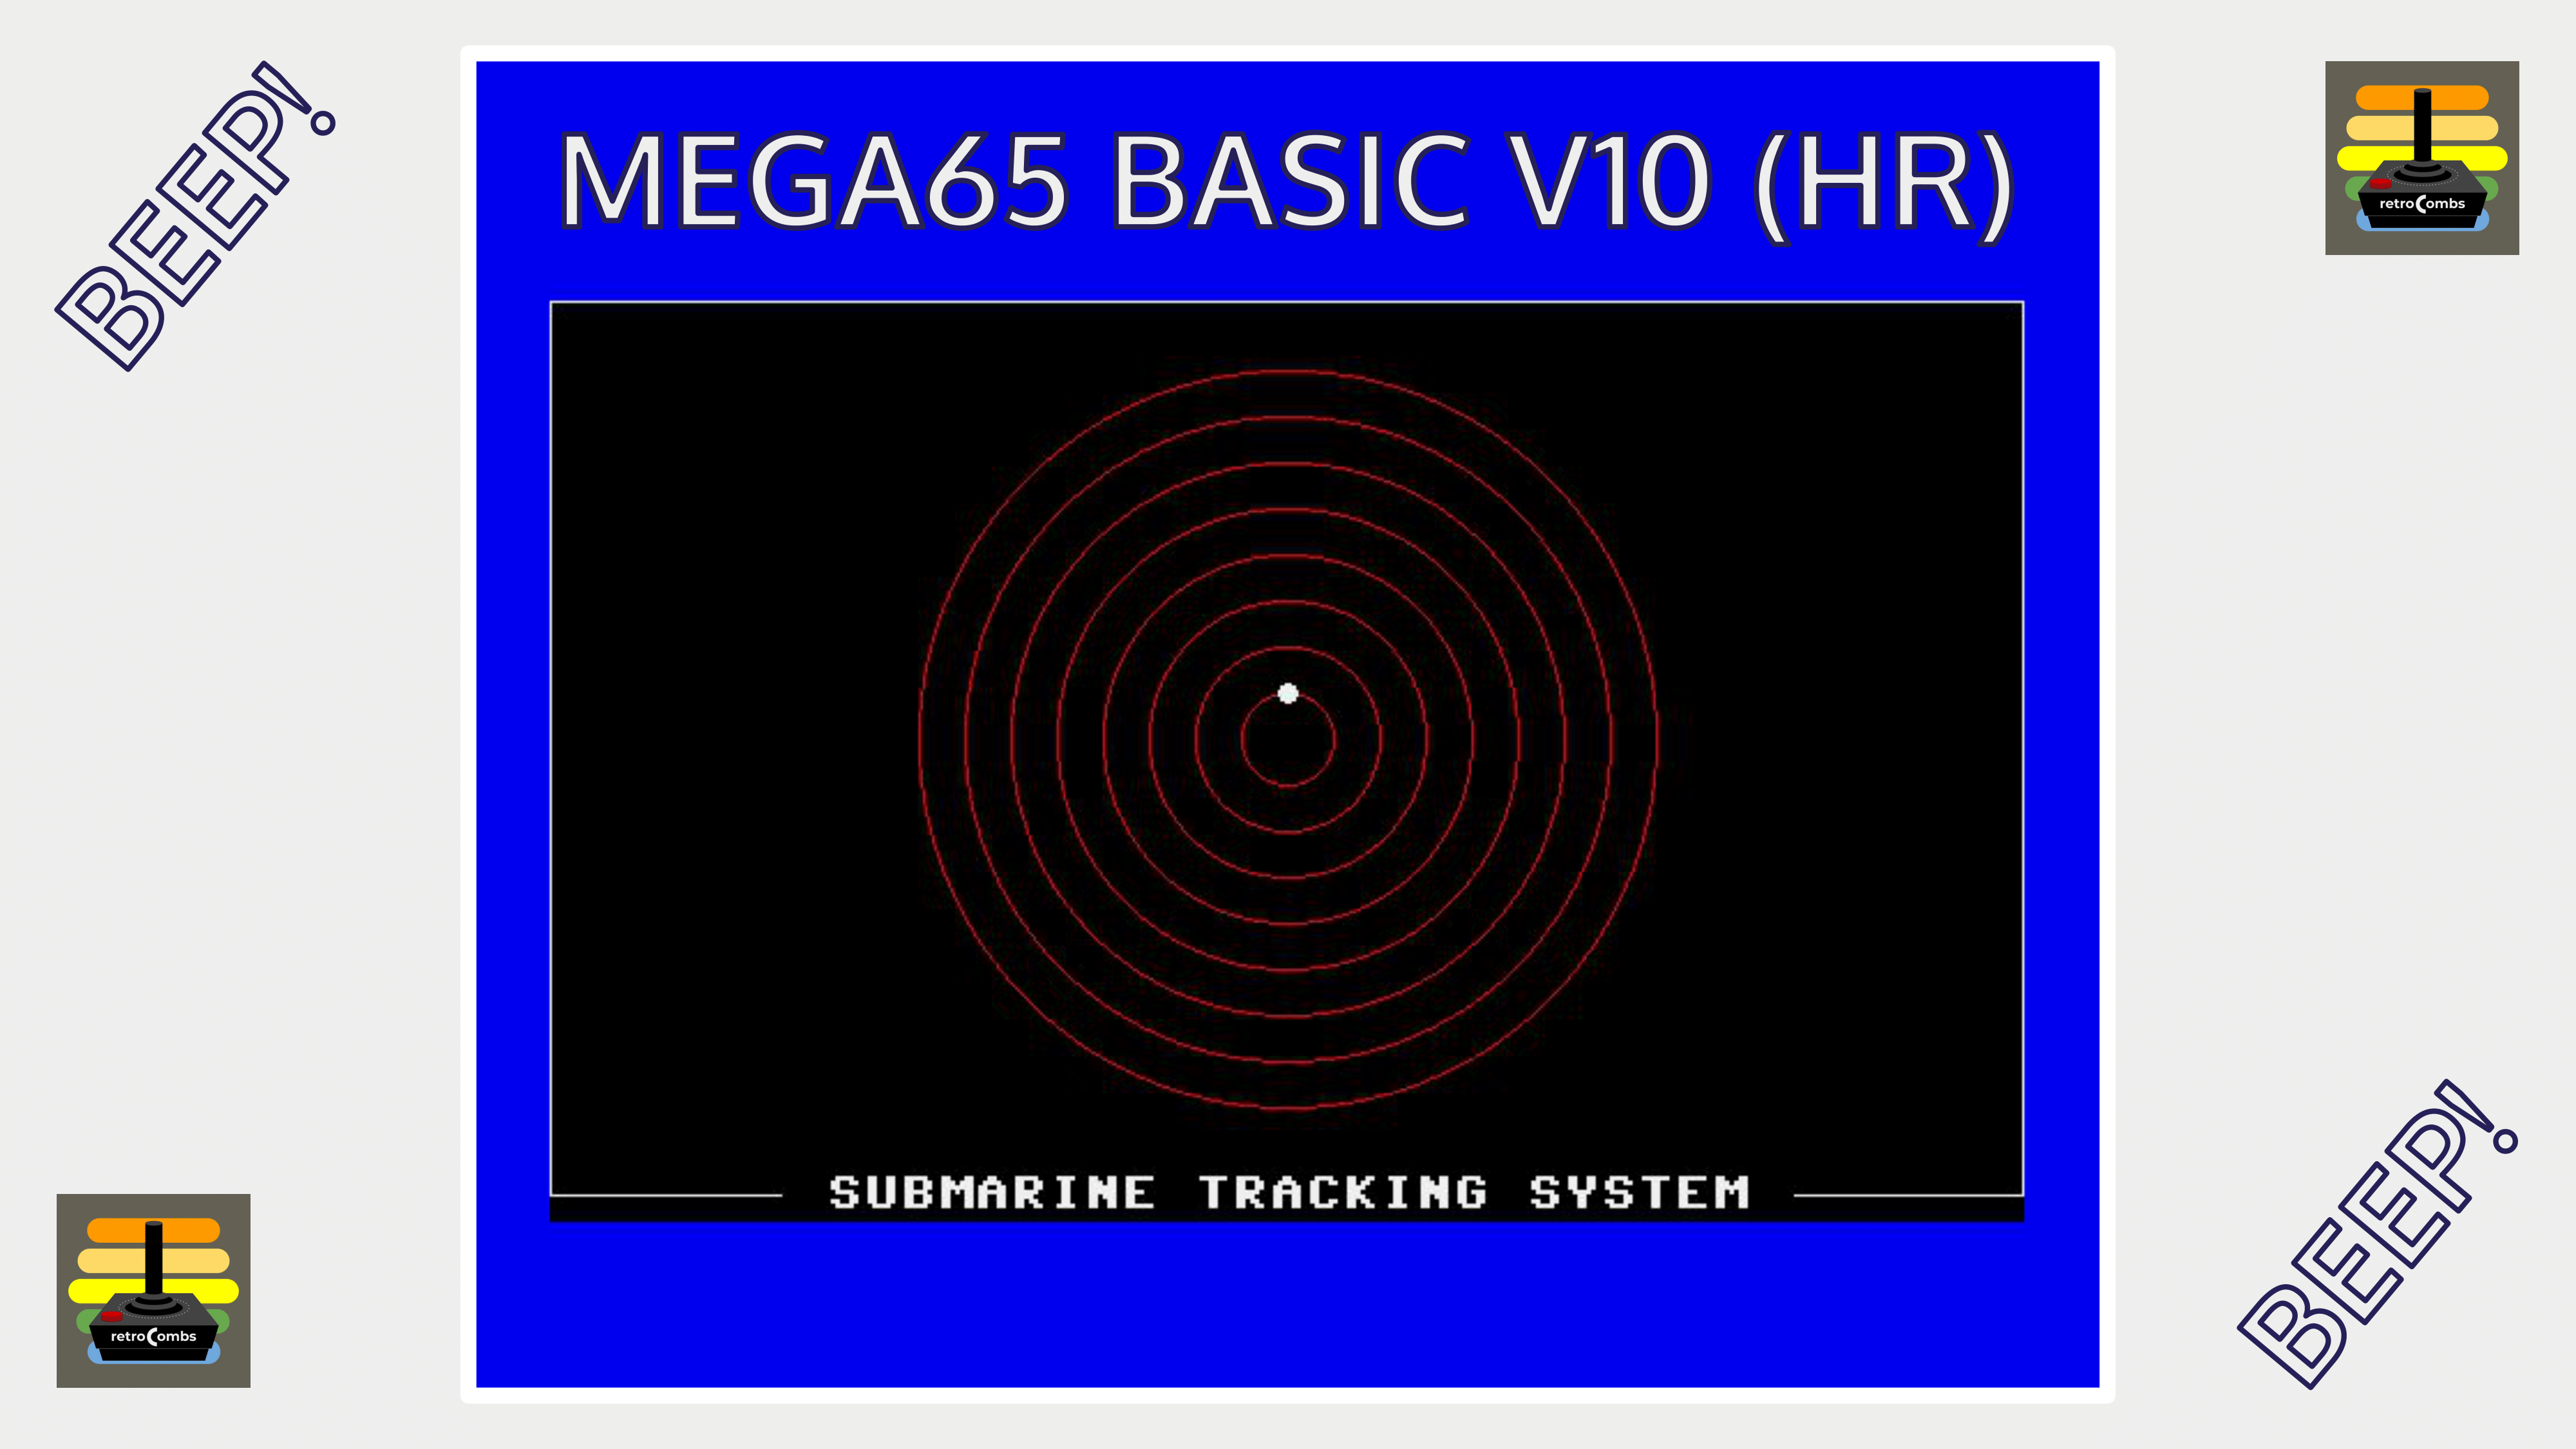 High Resolution MEGA65 Submarine Tracking System